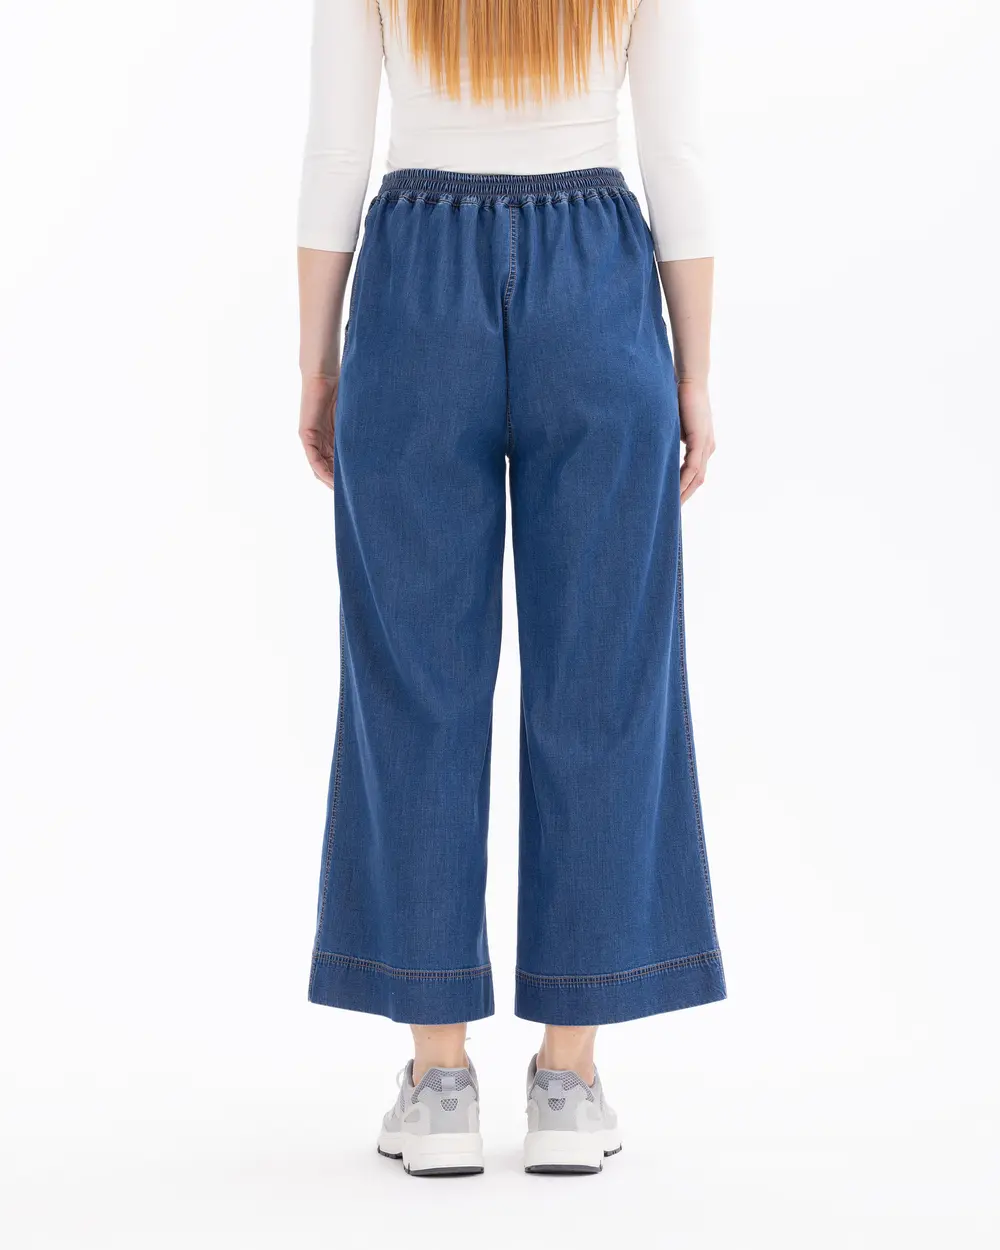 Wide Leg Belted Jean Pants with Pocket Details